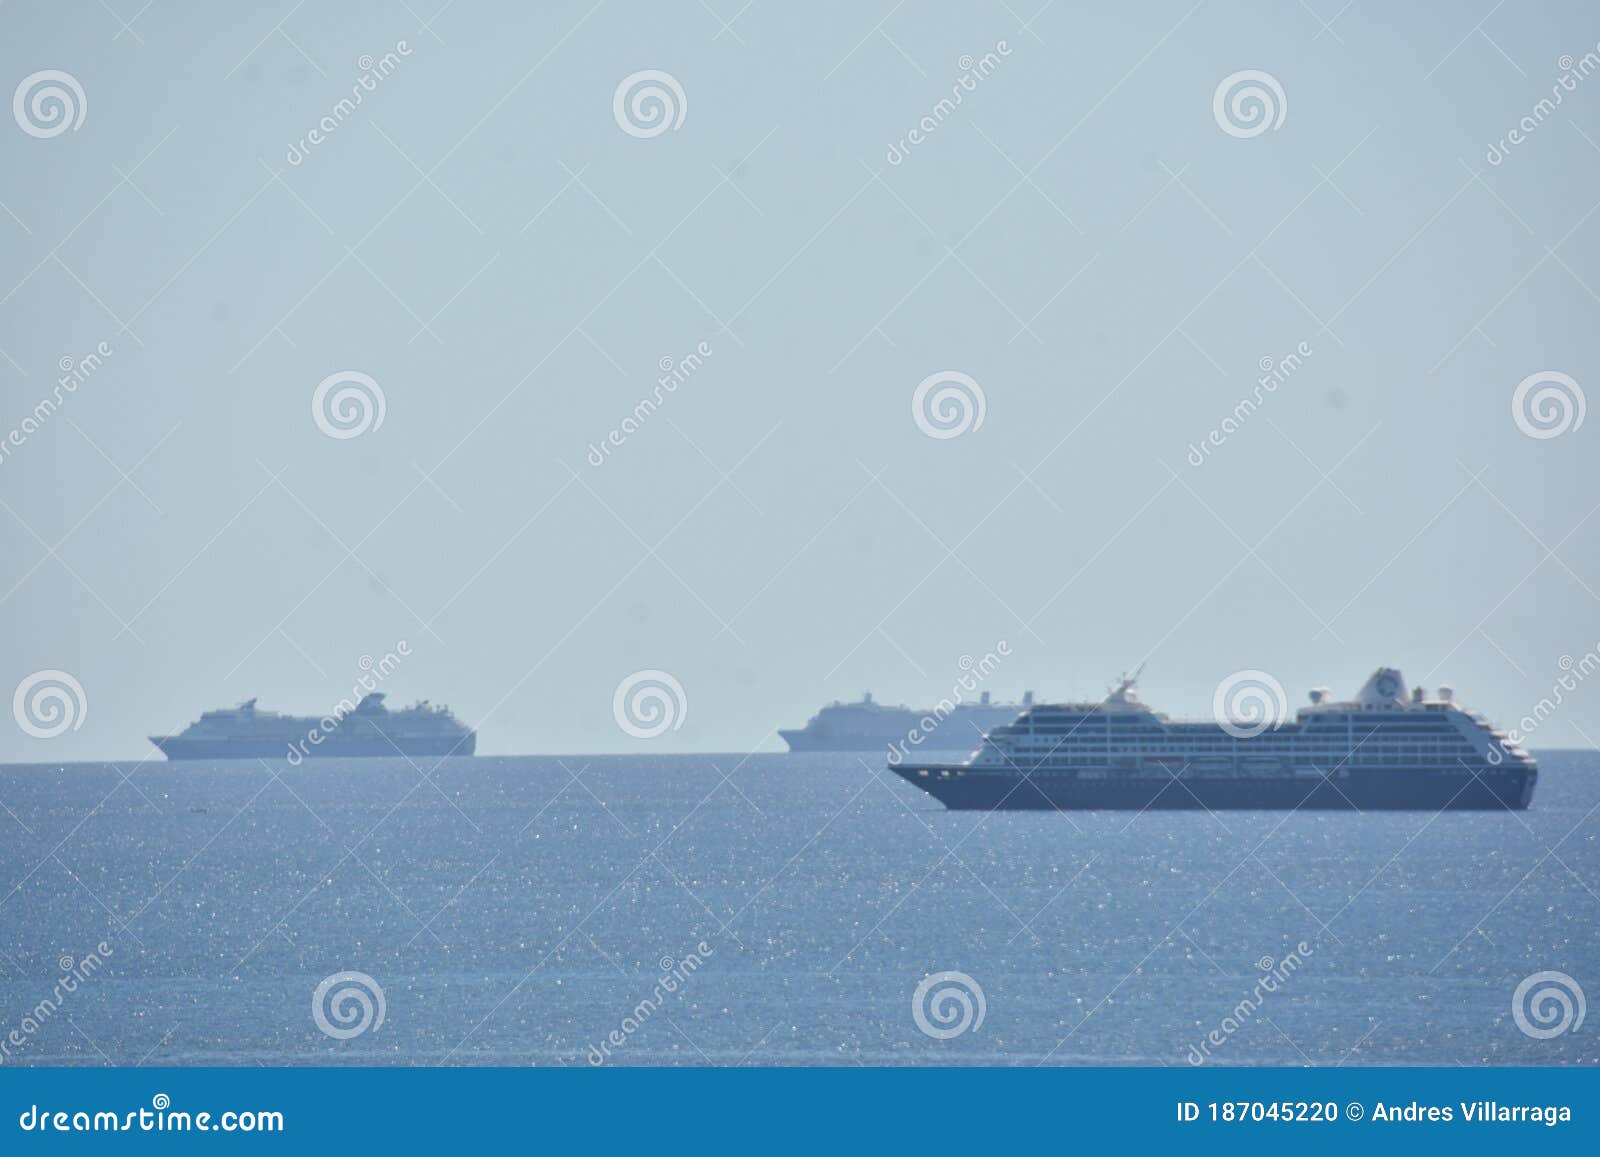 cruse ships saling awai from coco cai bahamas